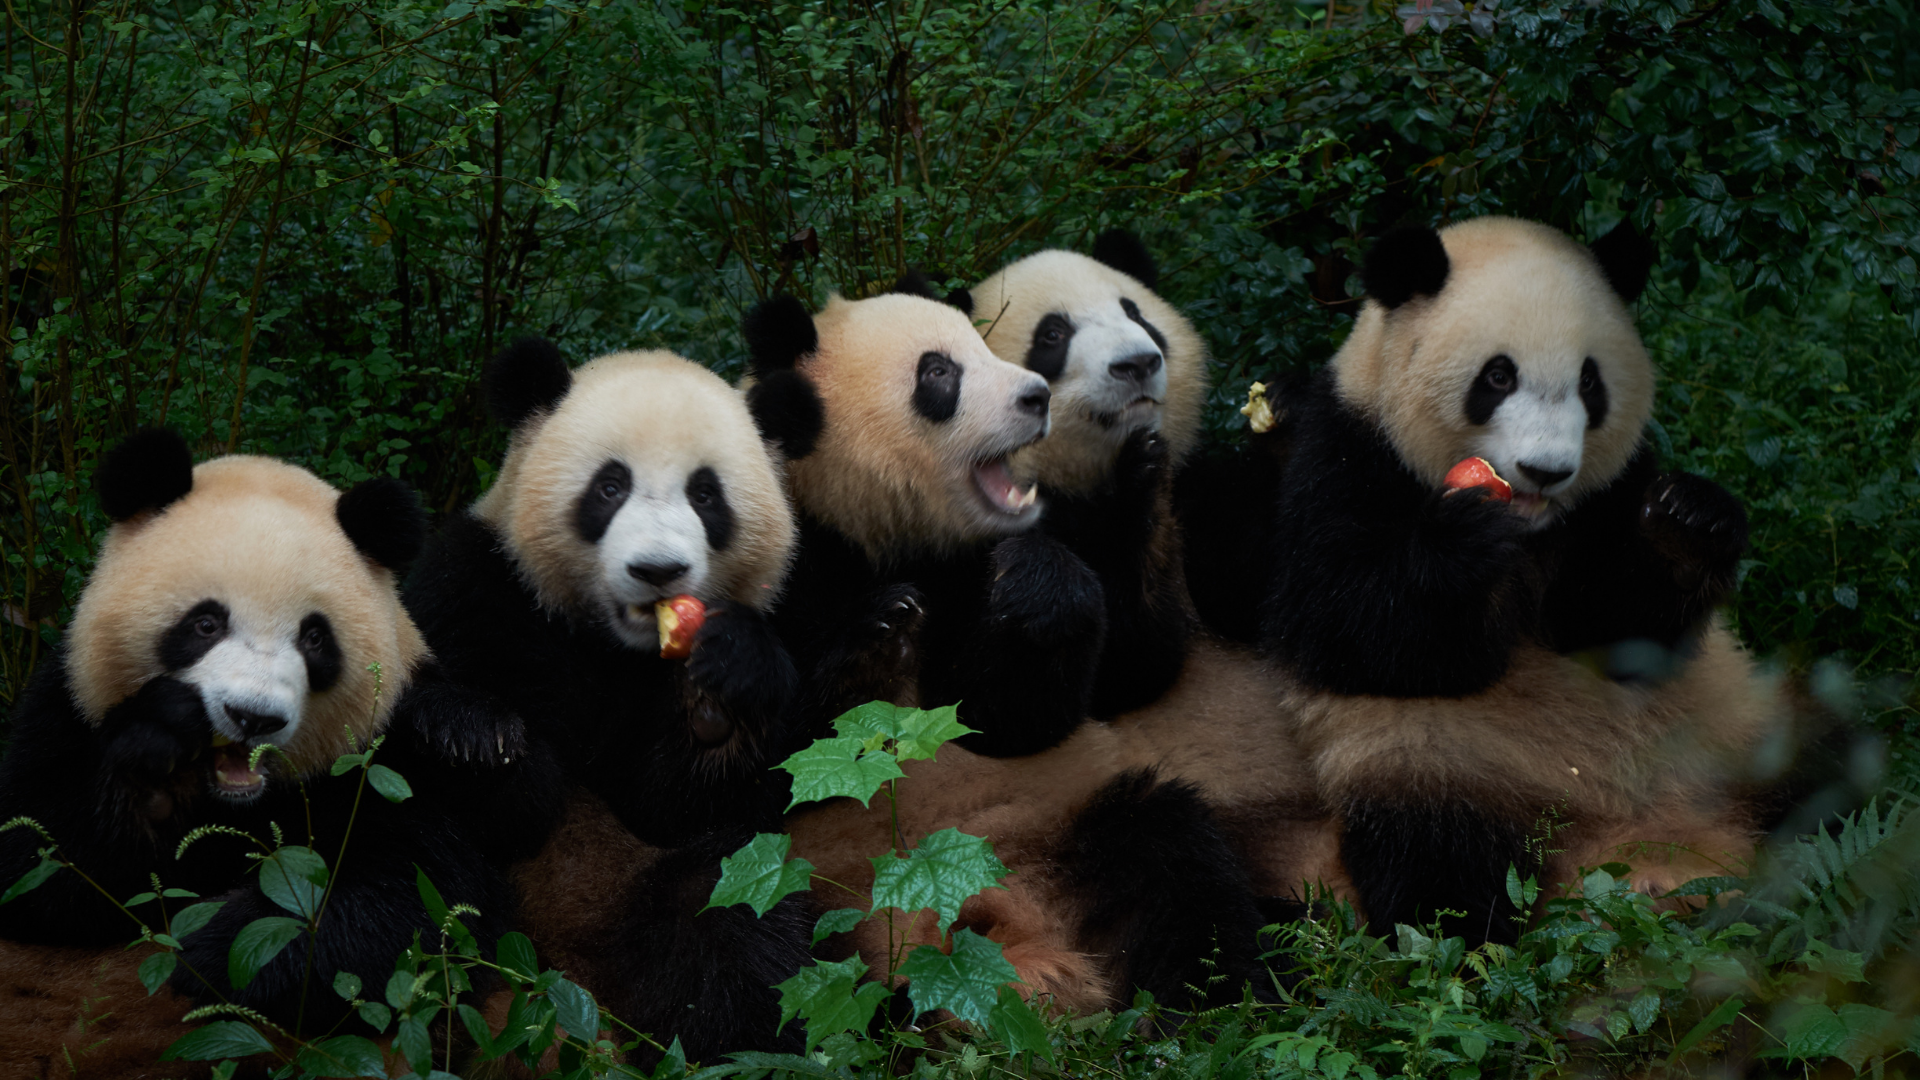 The Giant Panda Research & Breeding Center, Chengdu